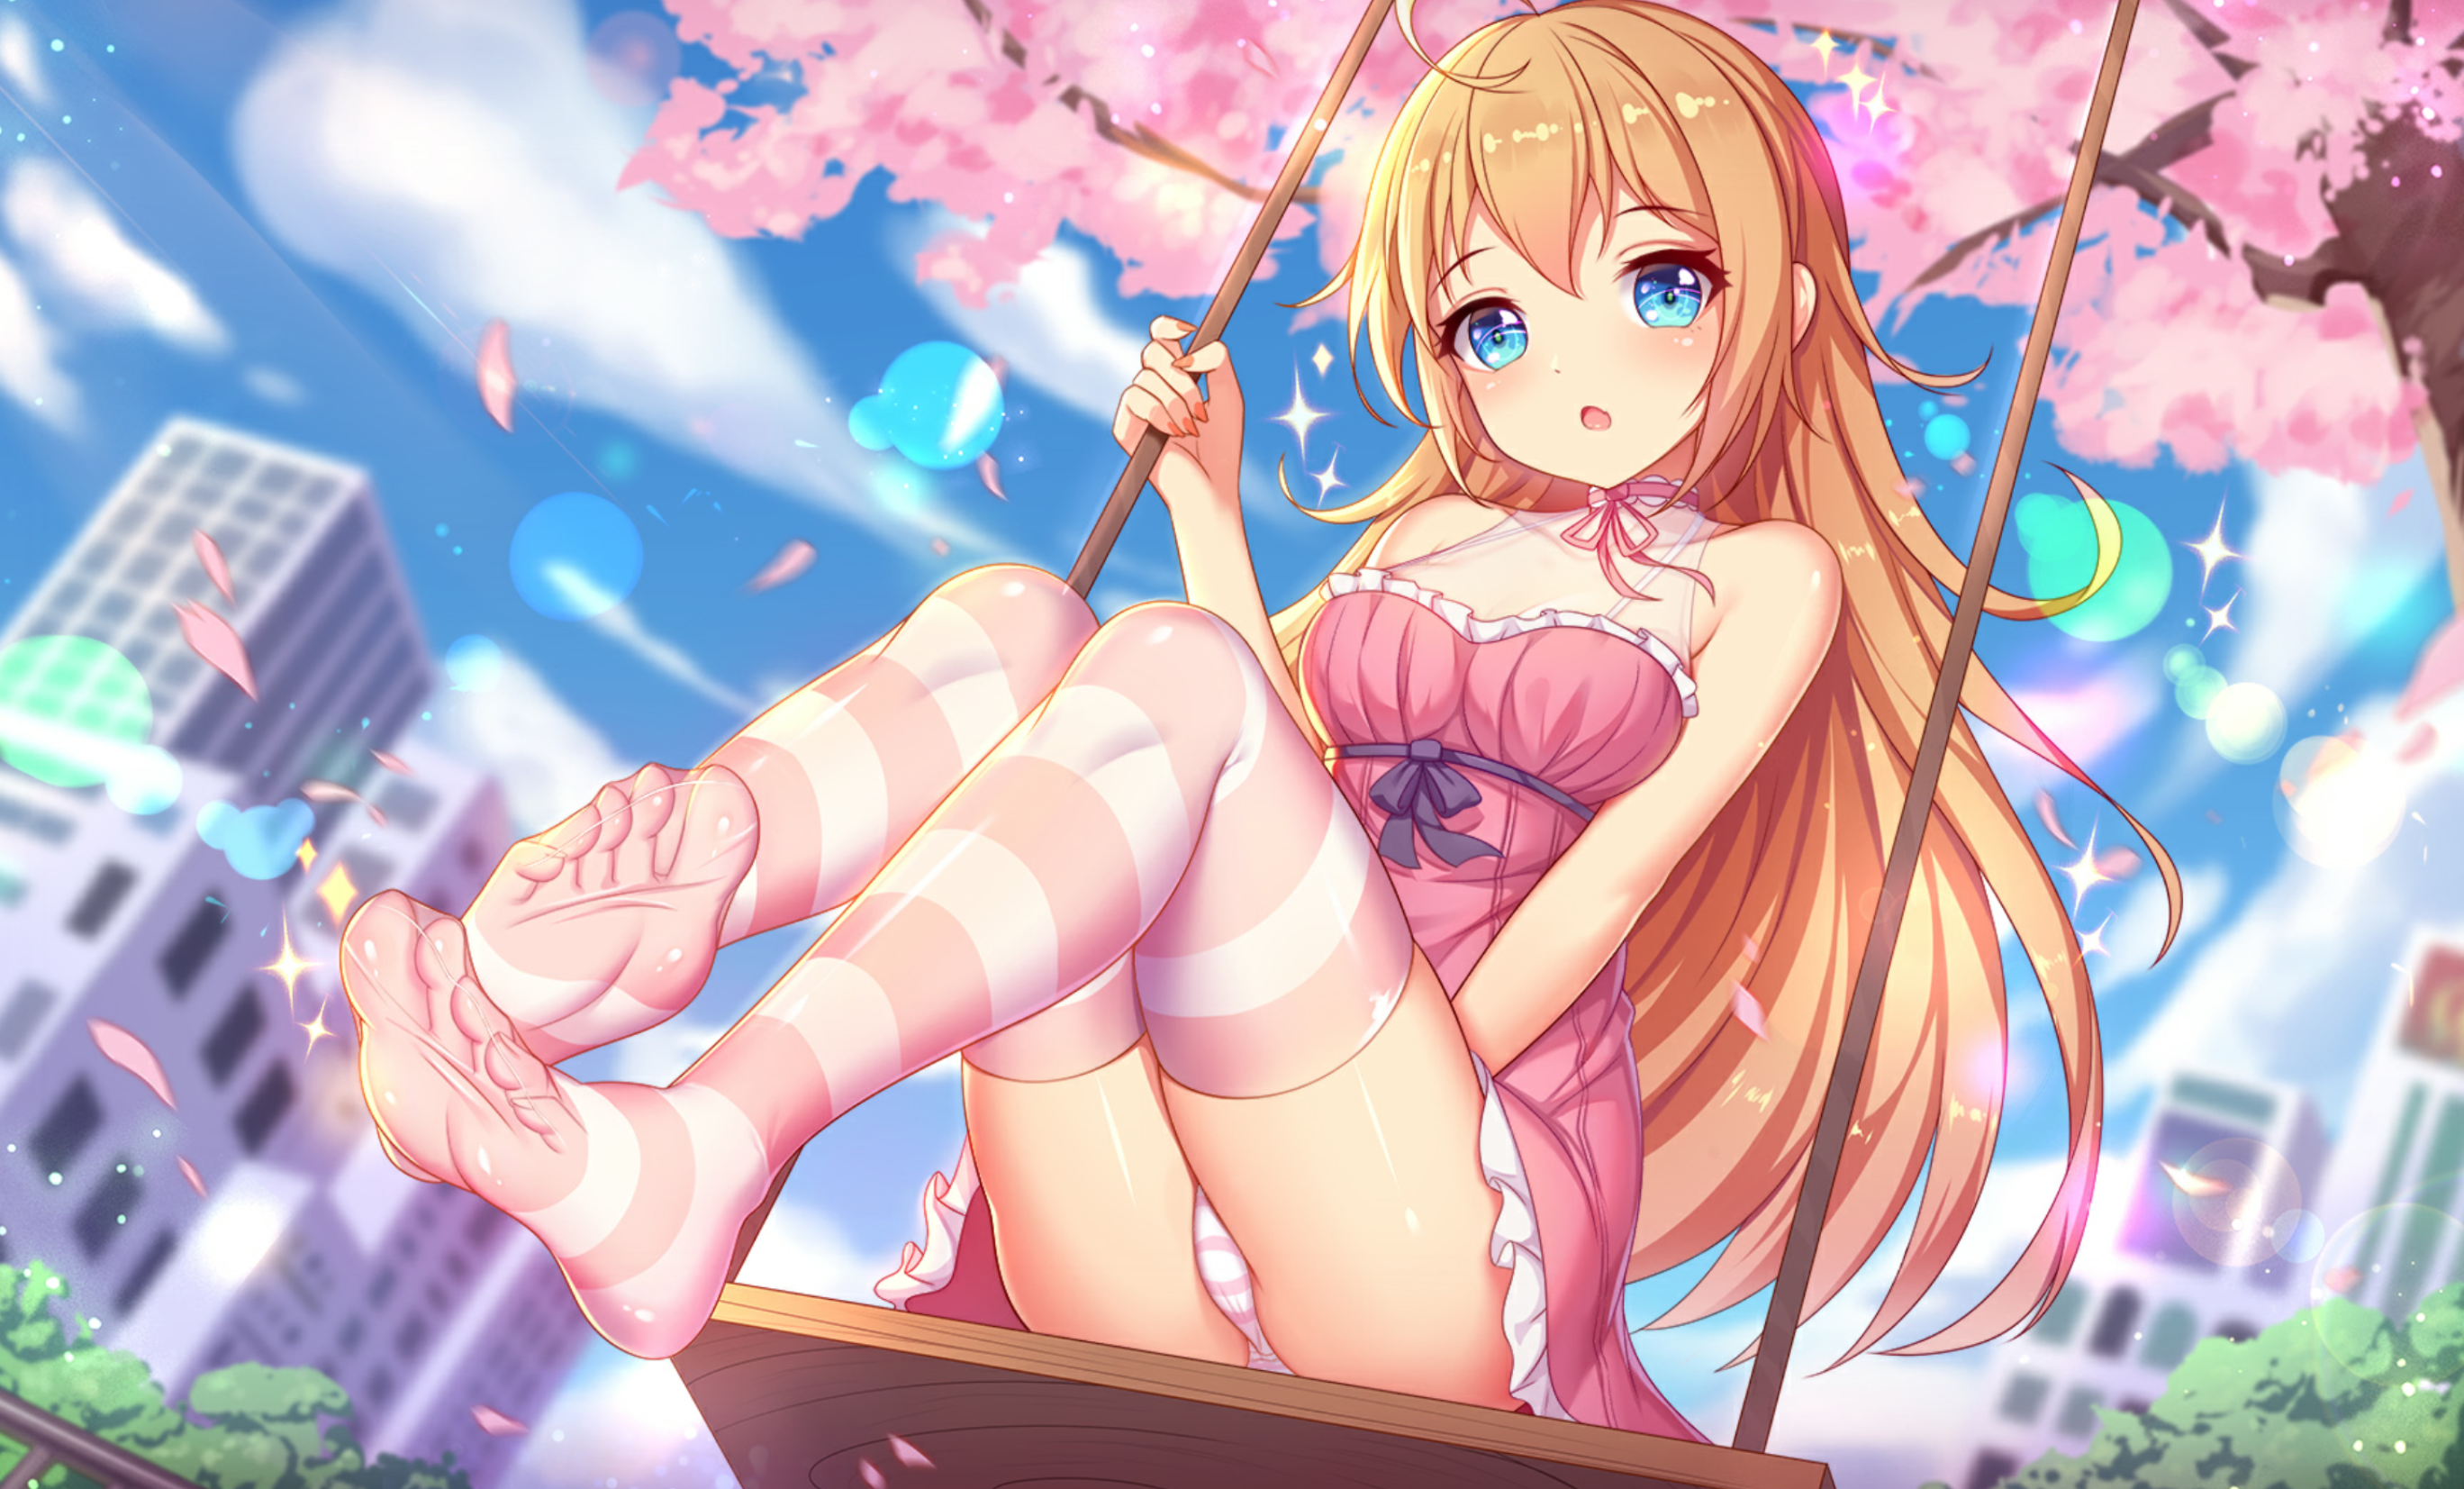 Anime 2736x1653 anime looking at viewer sheer stockings stockings feet toes blue eyes blonde long hair thigh-highs dress panties foot fetishism Game CG